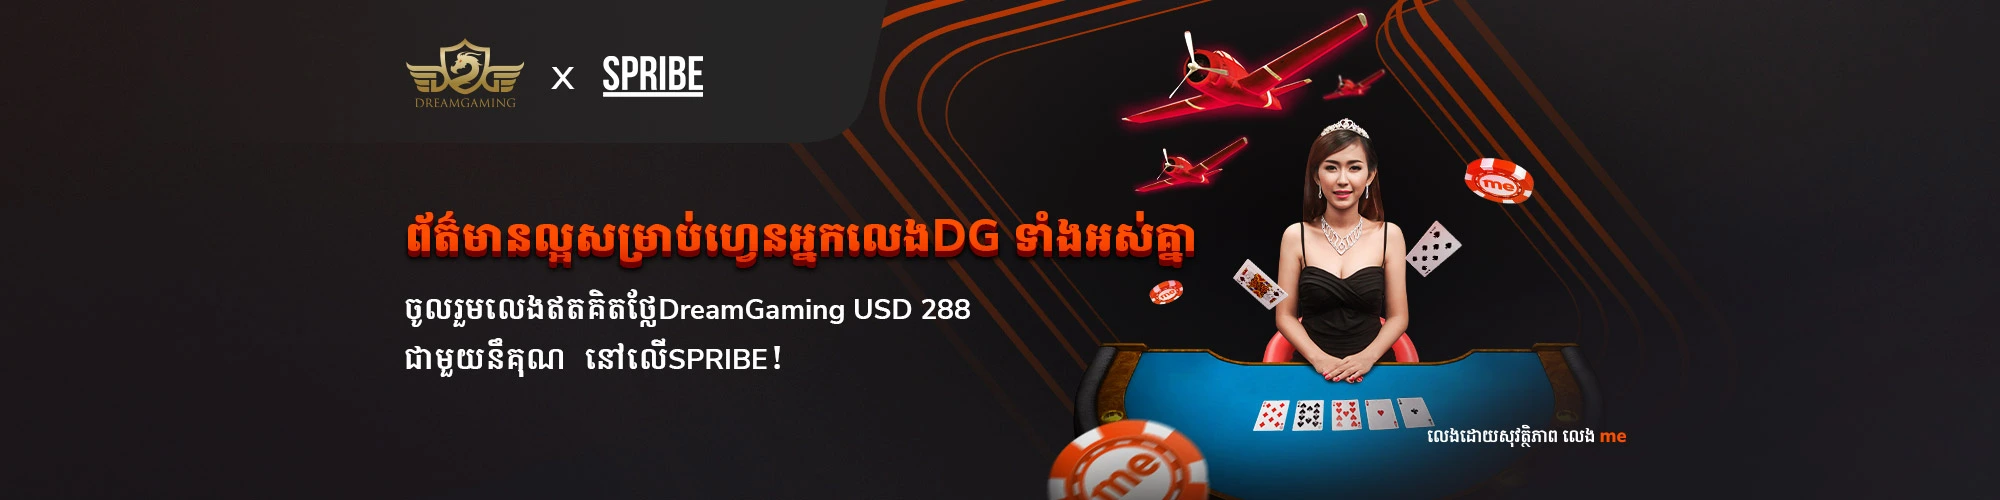 me88-dream-gaming-spribe-khmer